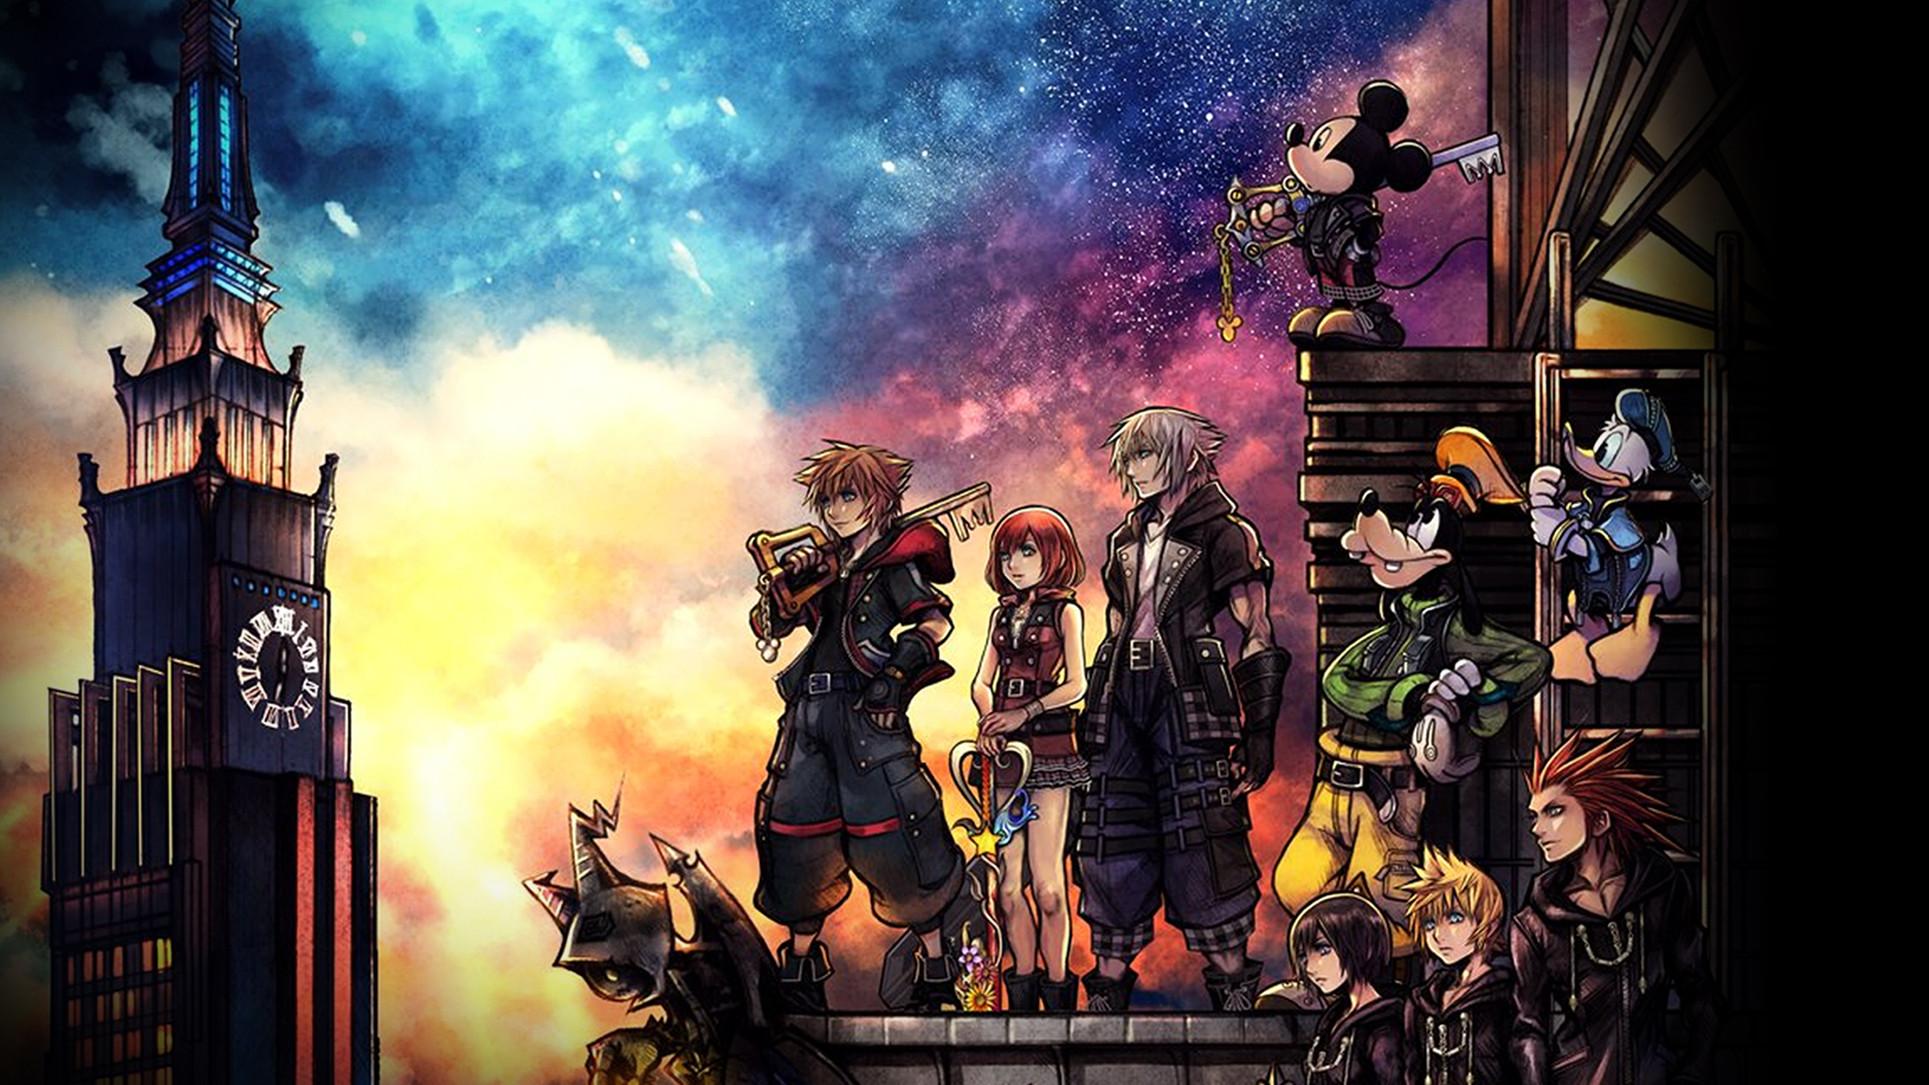 Kingdom Hearts 3 Wallpapers - Top Free Kingdom Hearts 3 Backgrounds